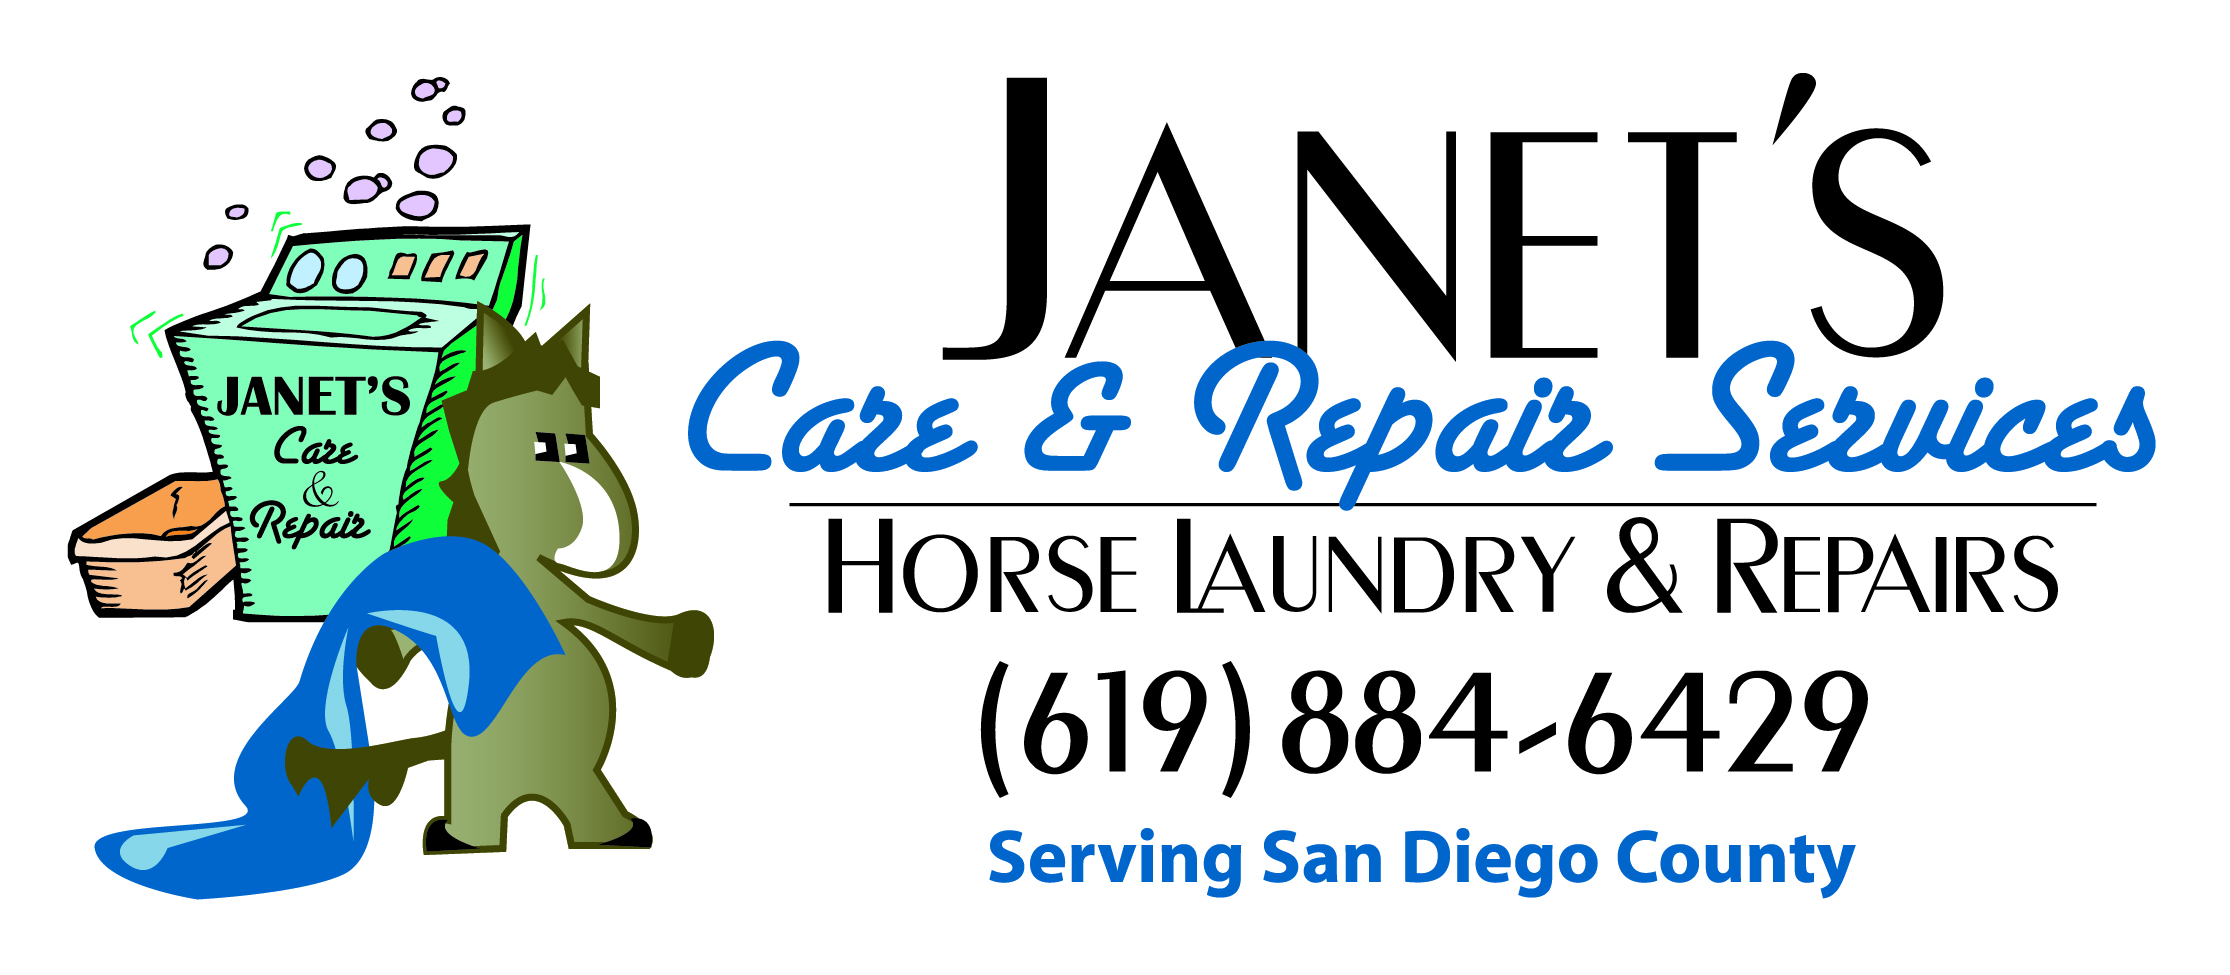 Janet's care and repair